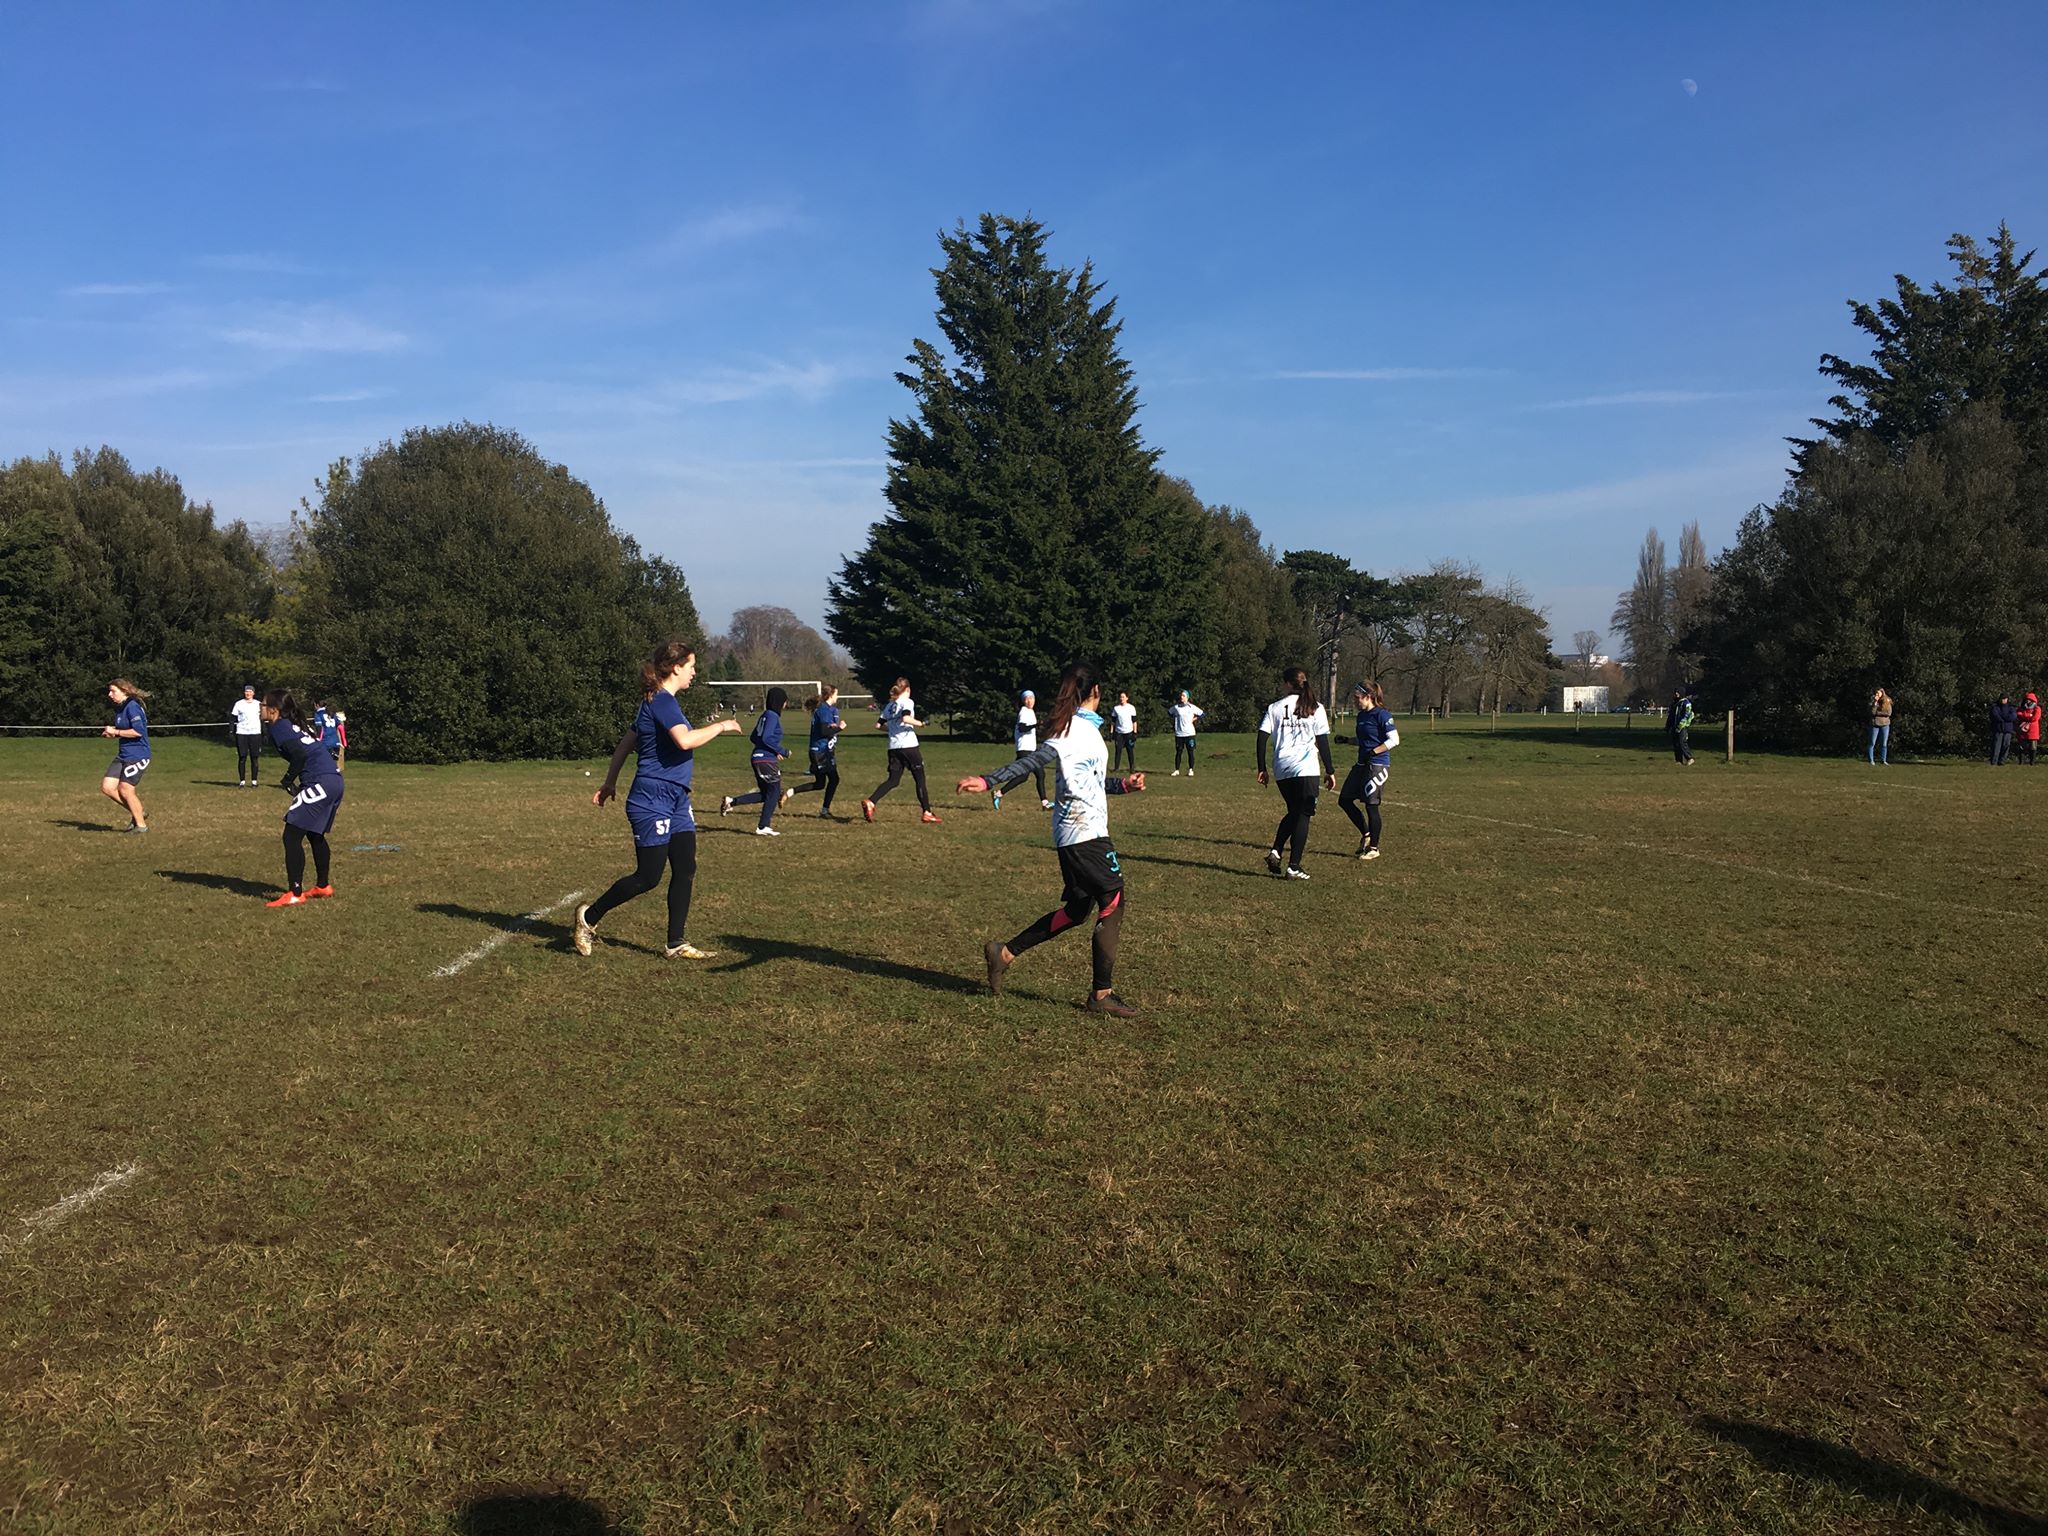 Cambridge University students playing sport and socializing